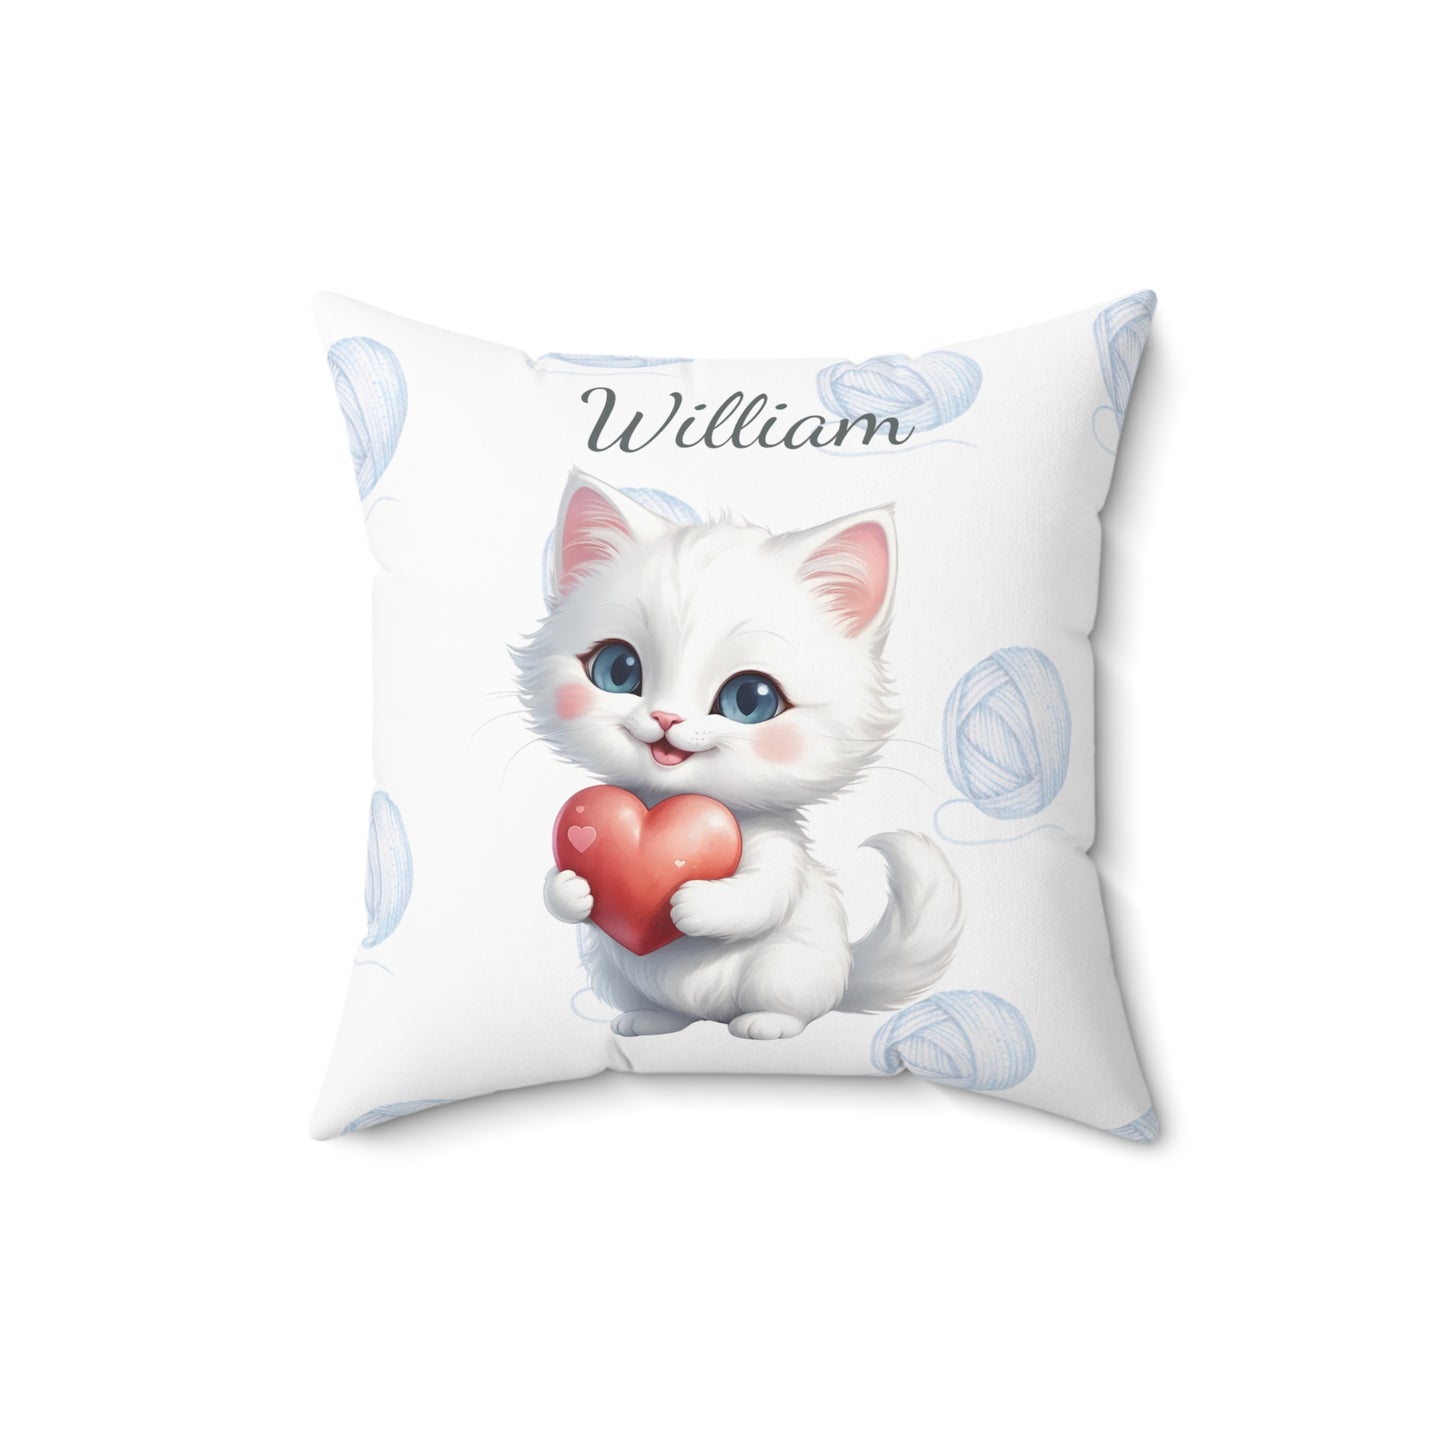 Luna the White Kitten - Personalized Nursery Pillow